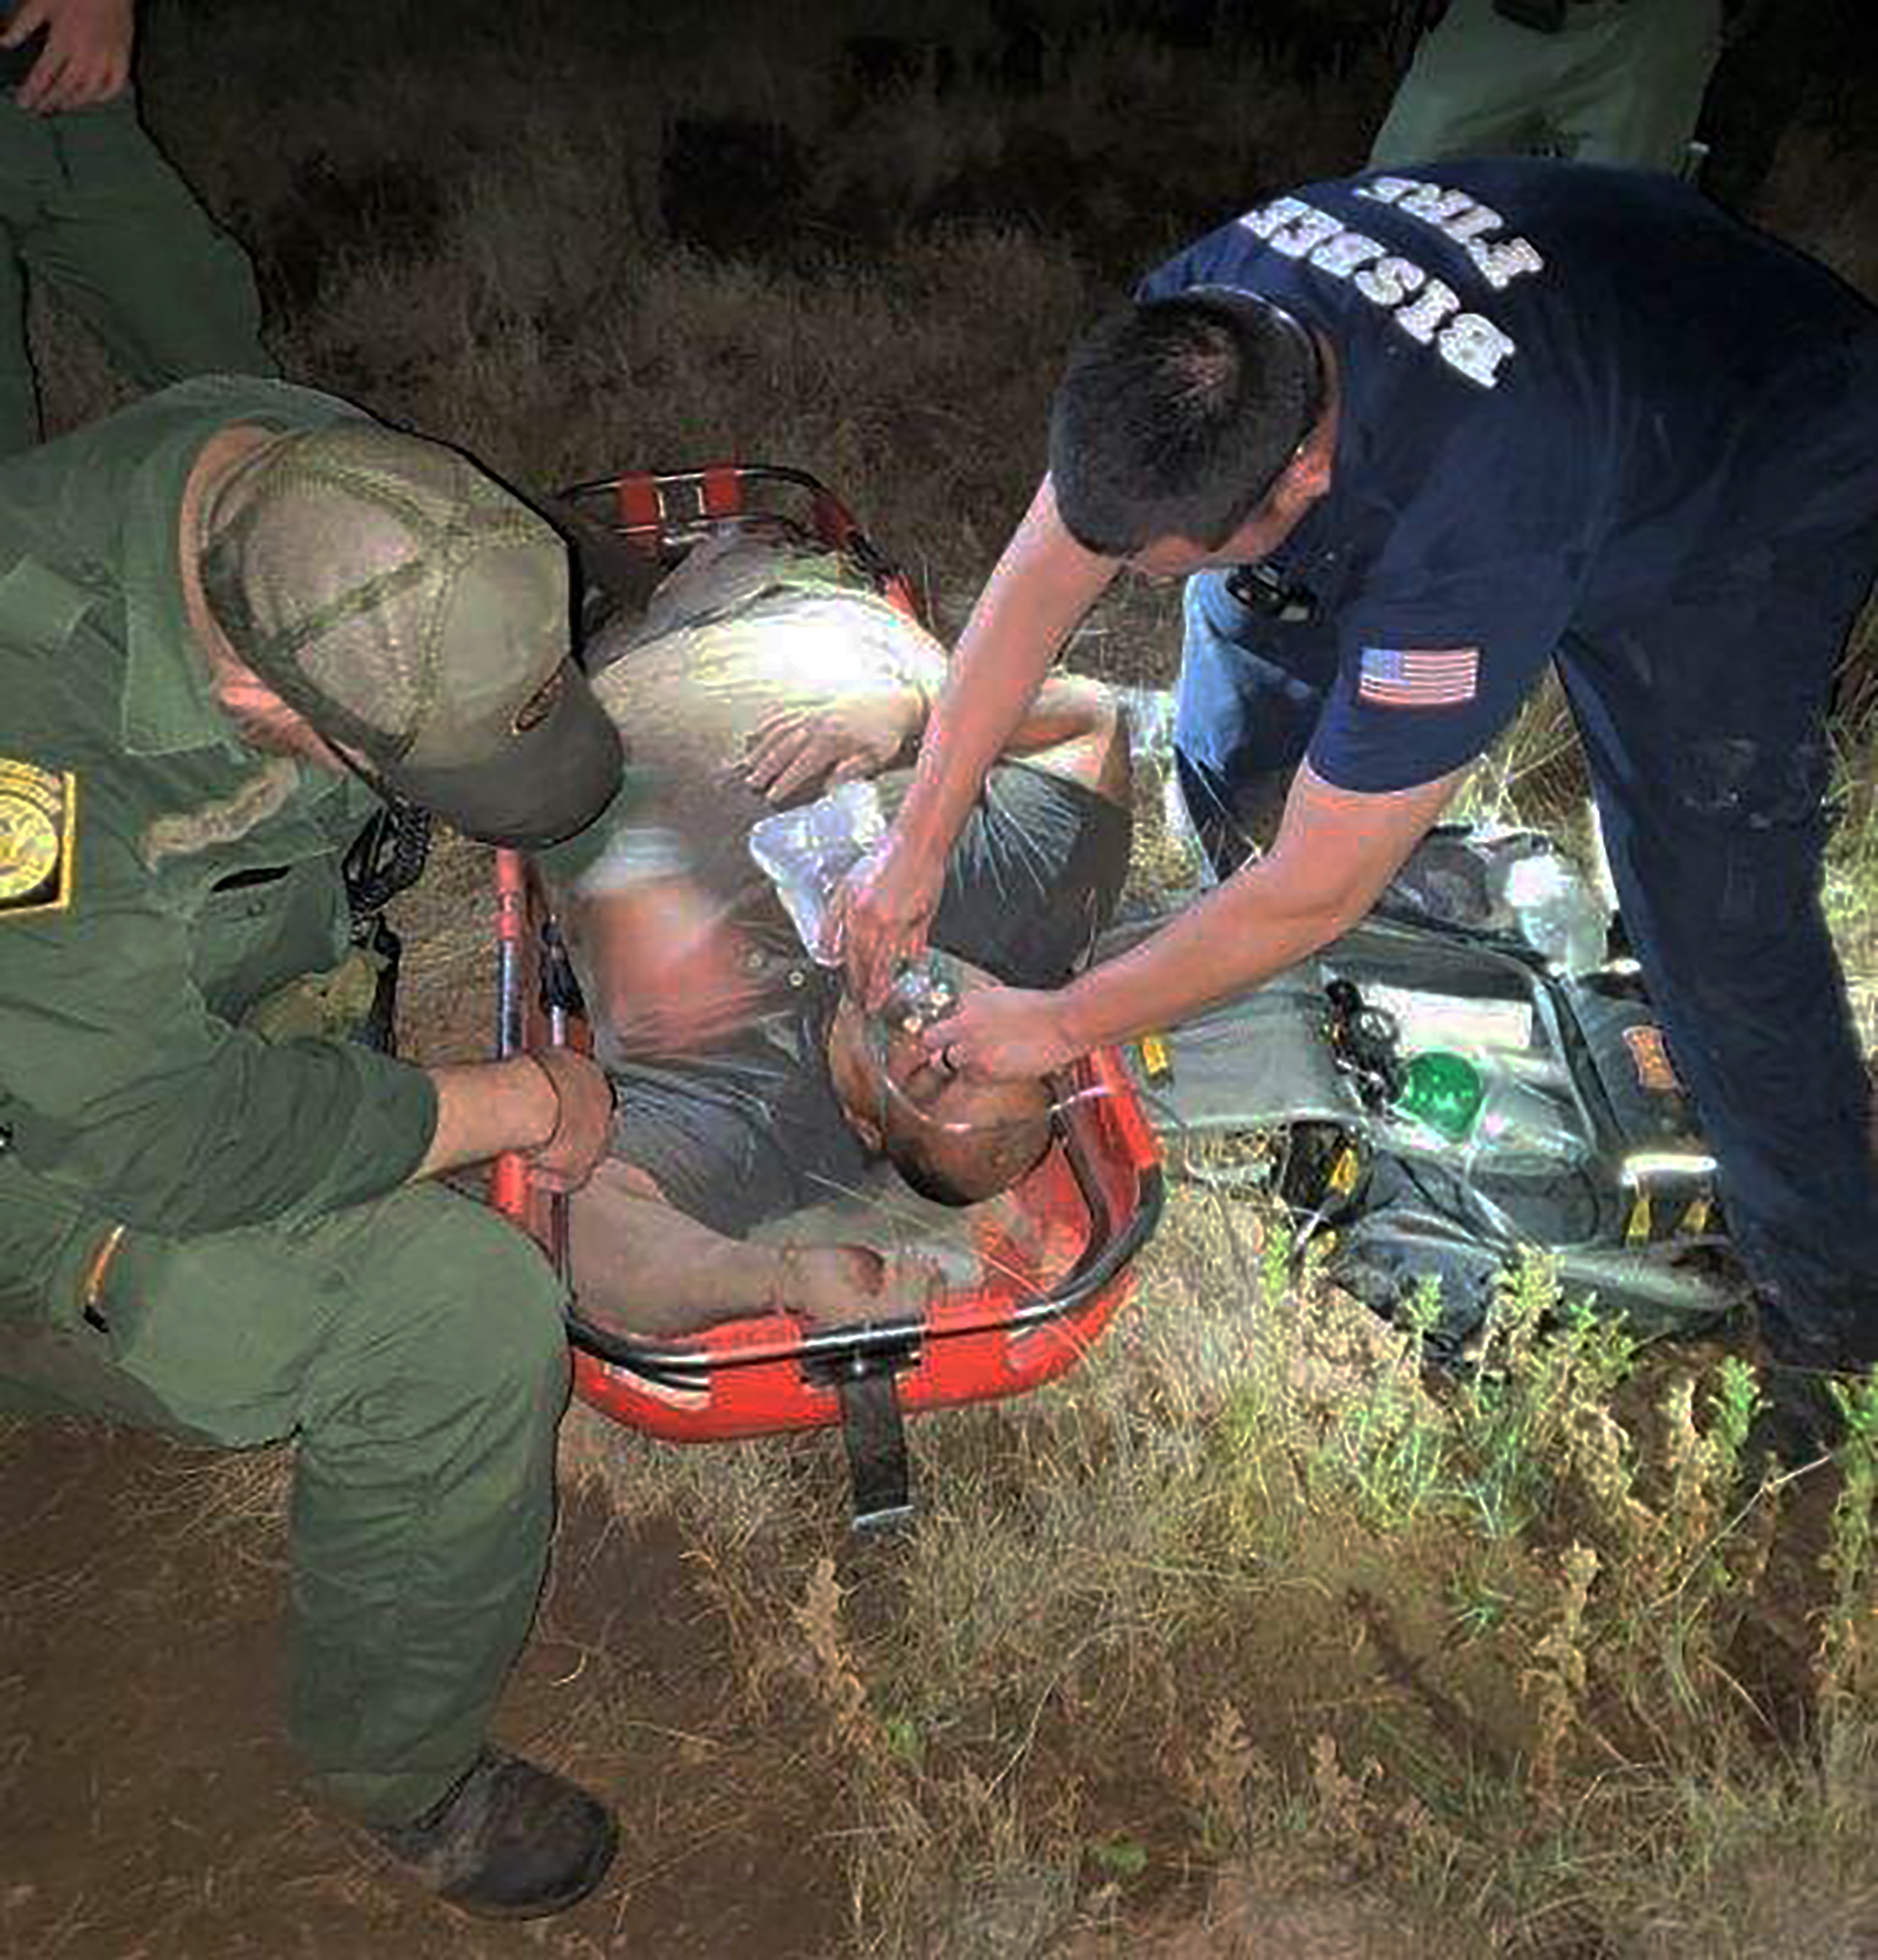 Border Patrol agents rescue a man in distress.